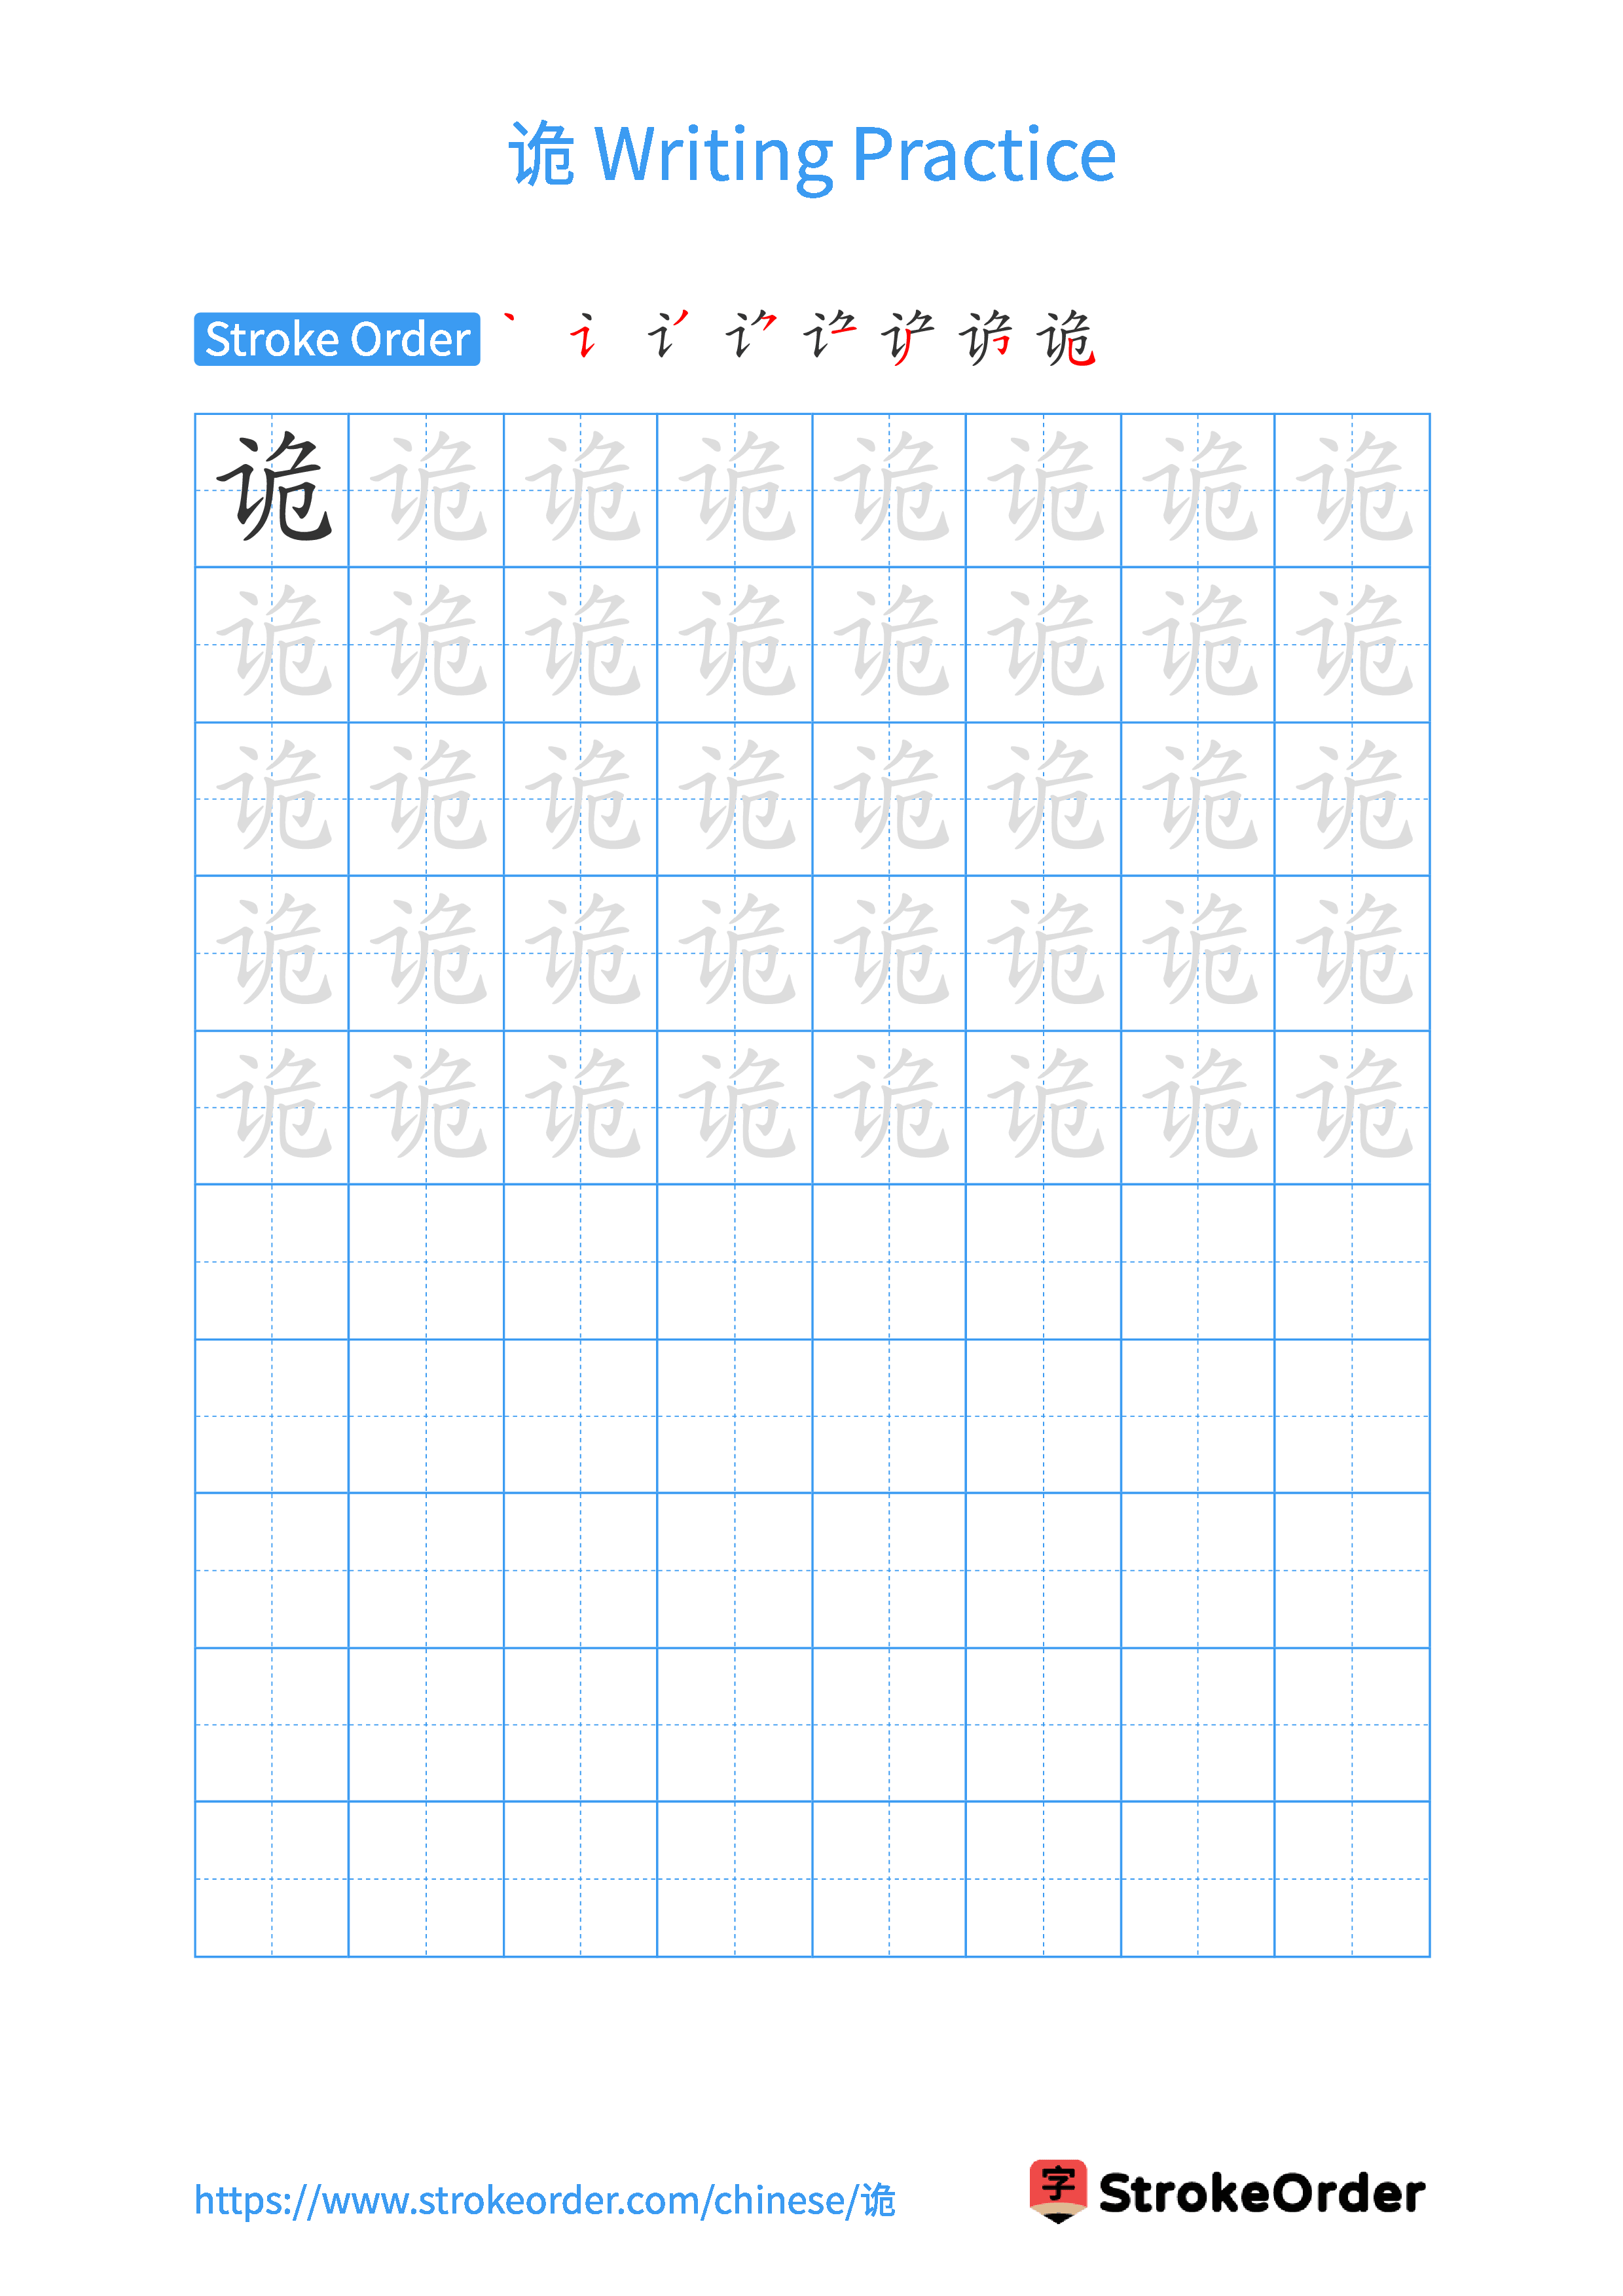 Printable Handwriting Practice Worksheet of the Chinese character 诡 in Portrait Orientation (Tian Zi Ge)